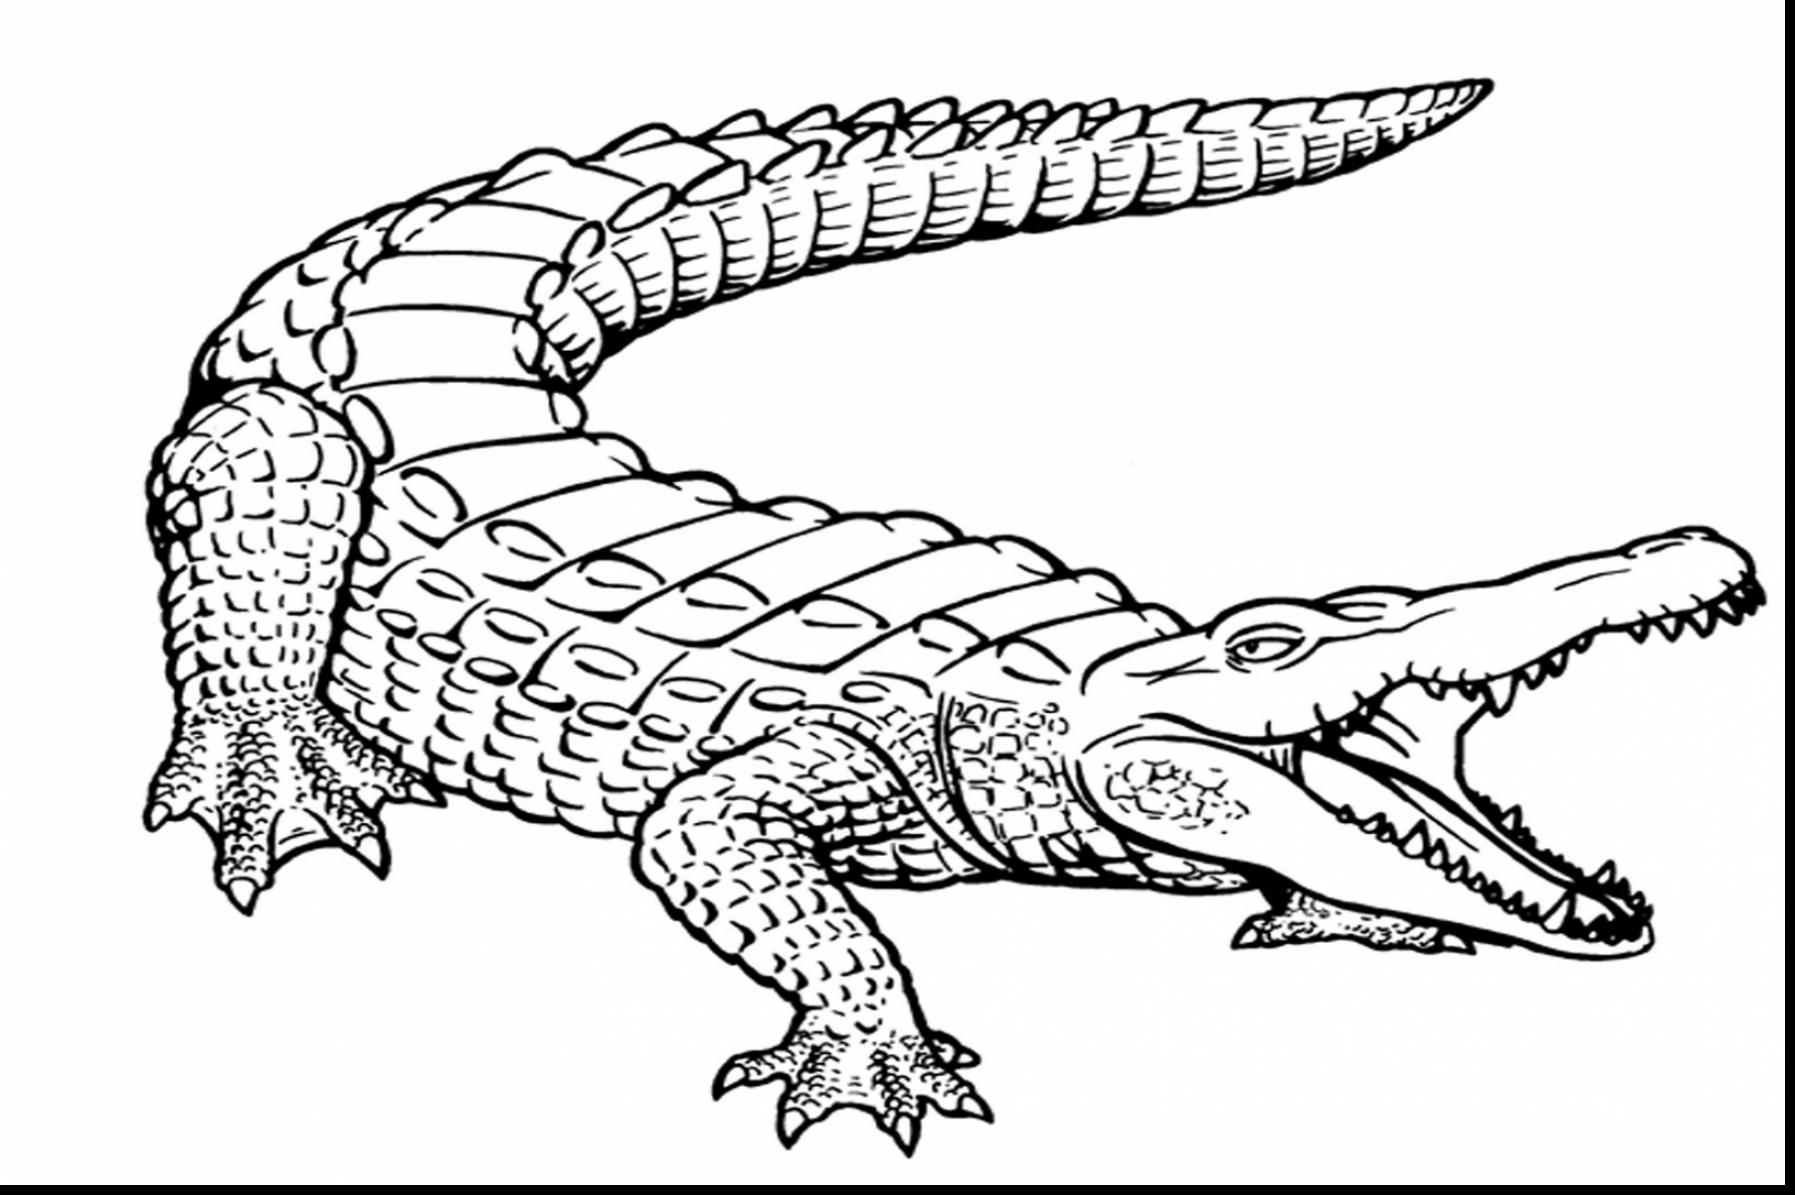 Crocodile Line Drawing at GetDrawings | Free download